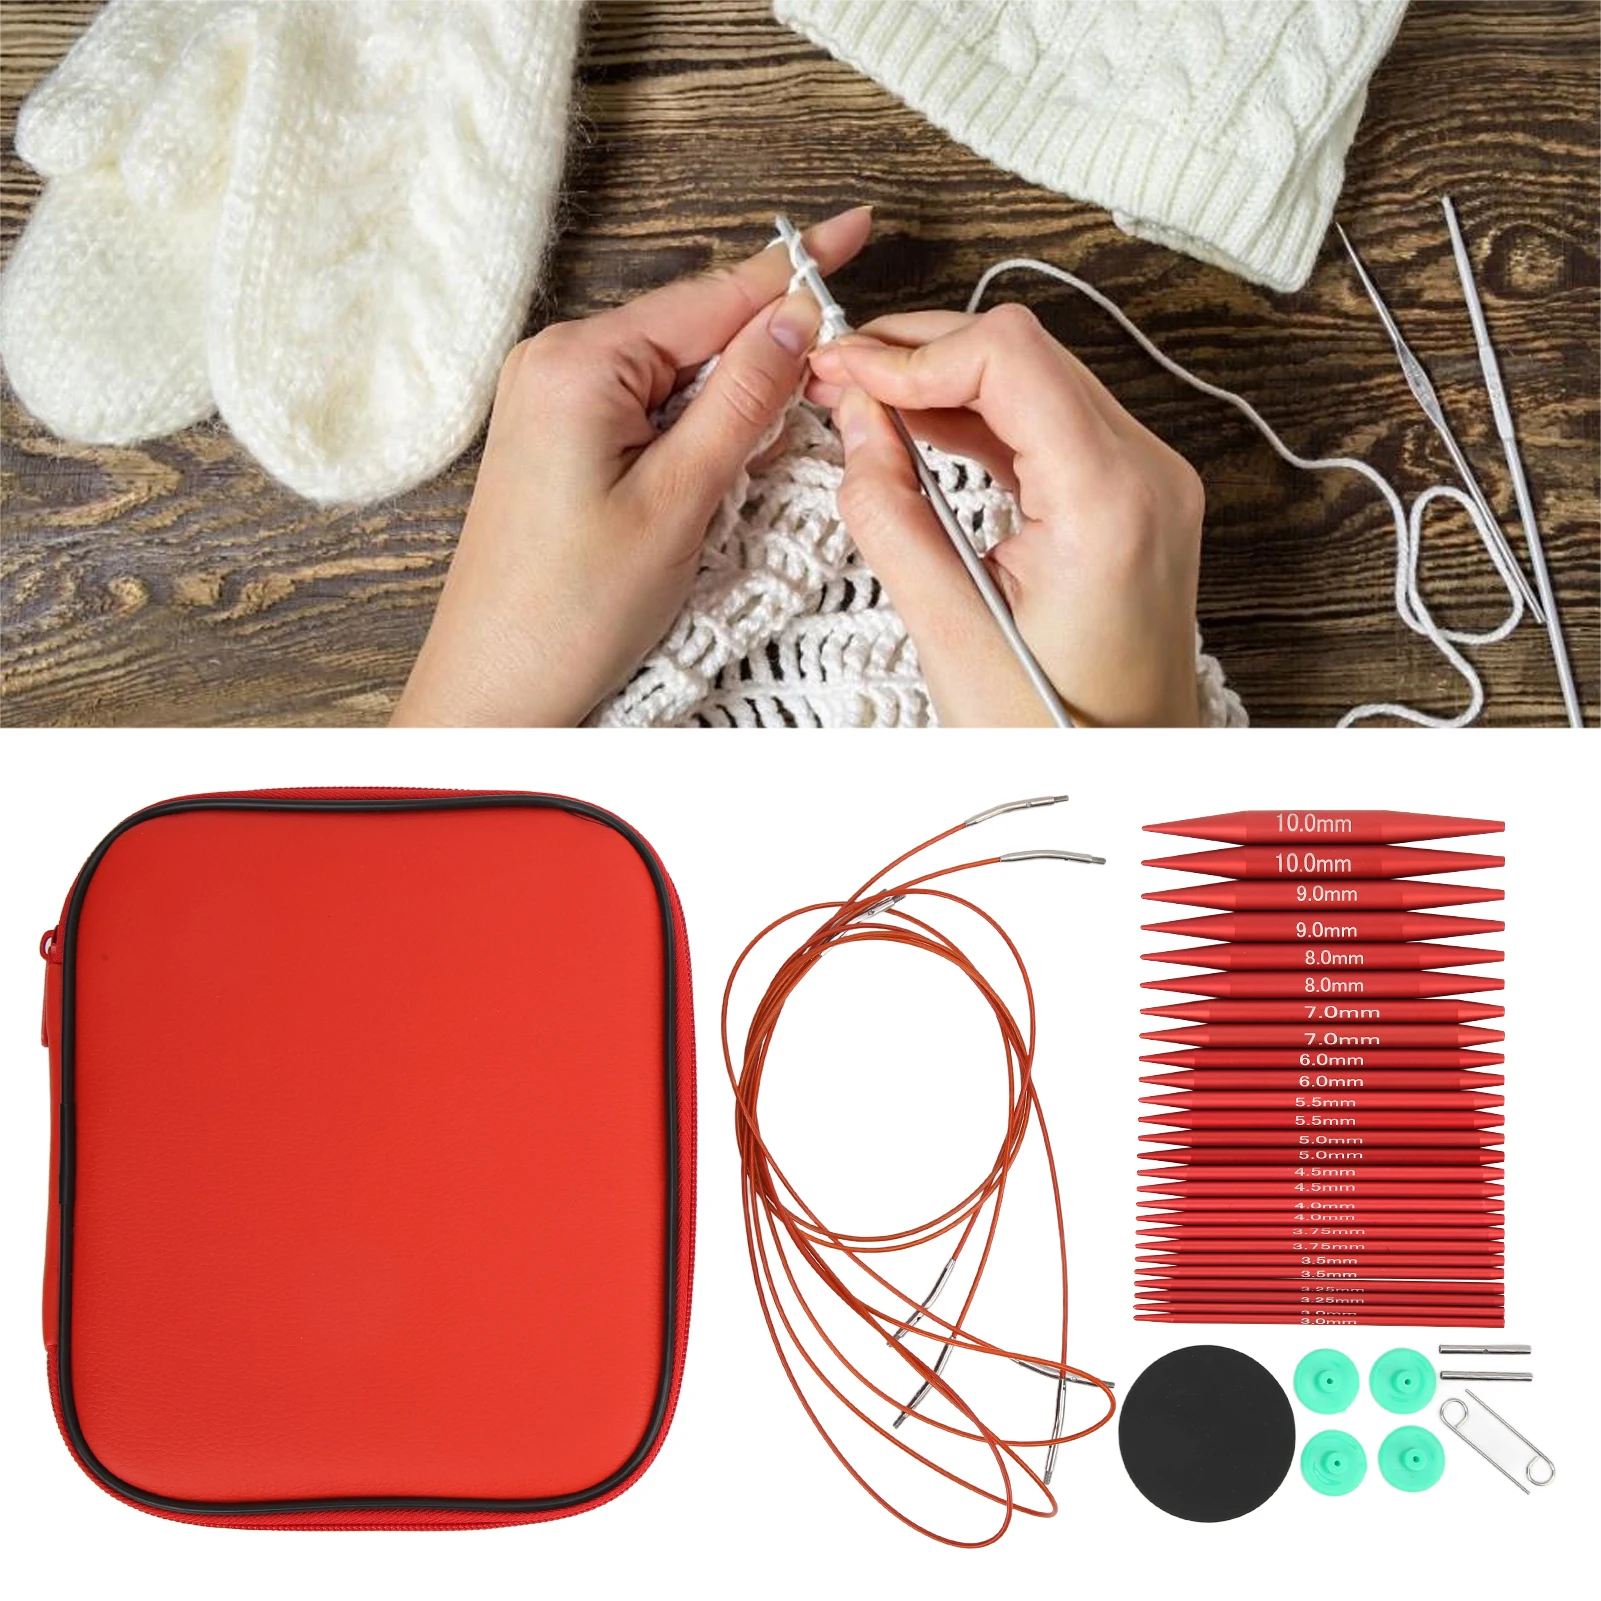 

Knitting Needles Set Various Sizes Available Detachable Circular Interchangeable Knitting Needles Crochet Kit